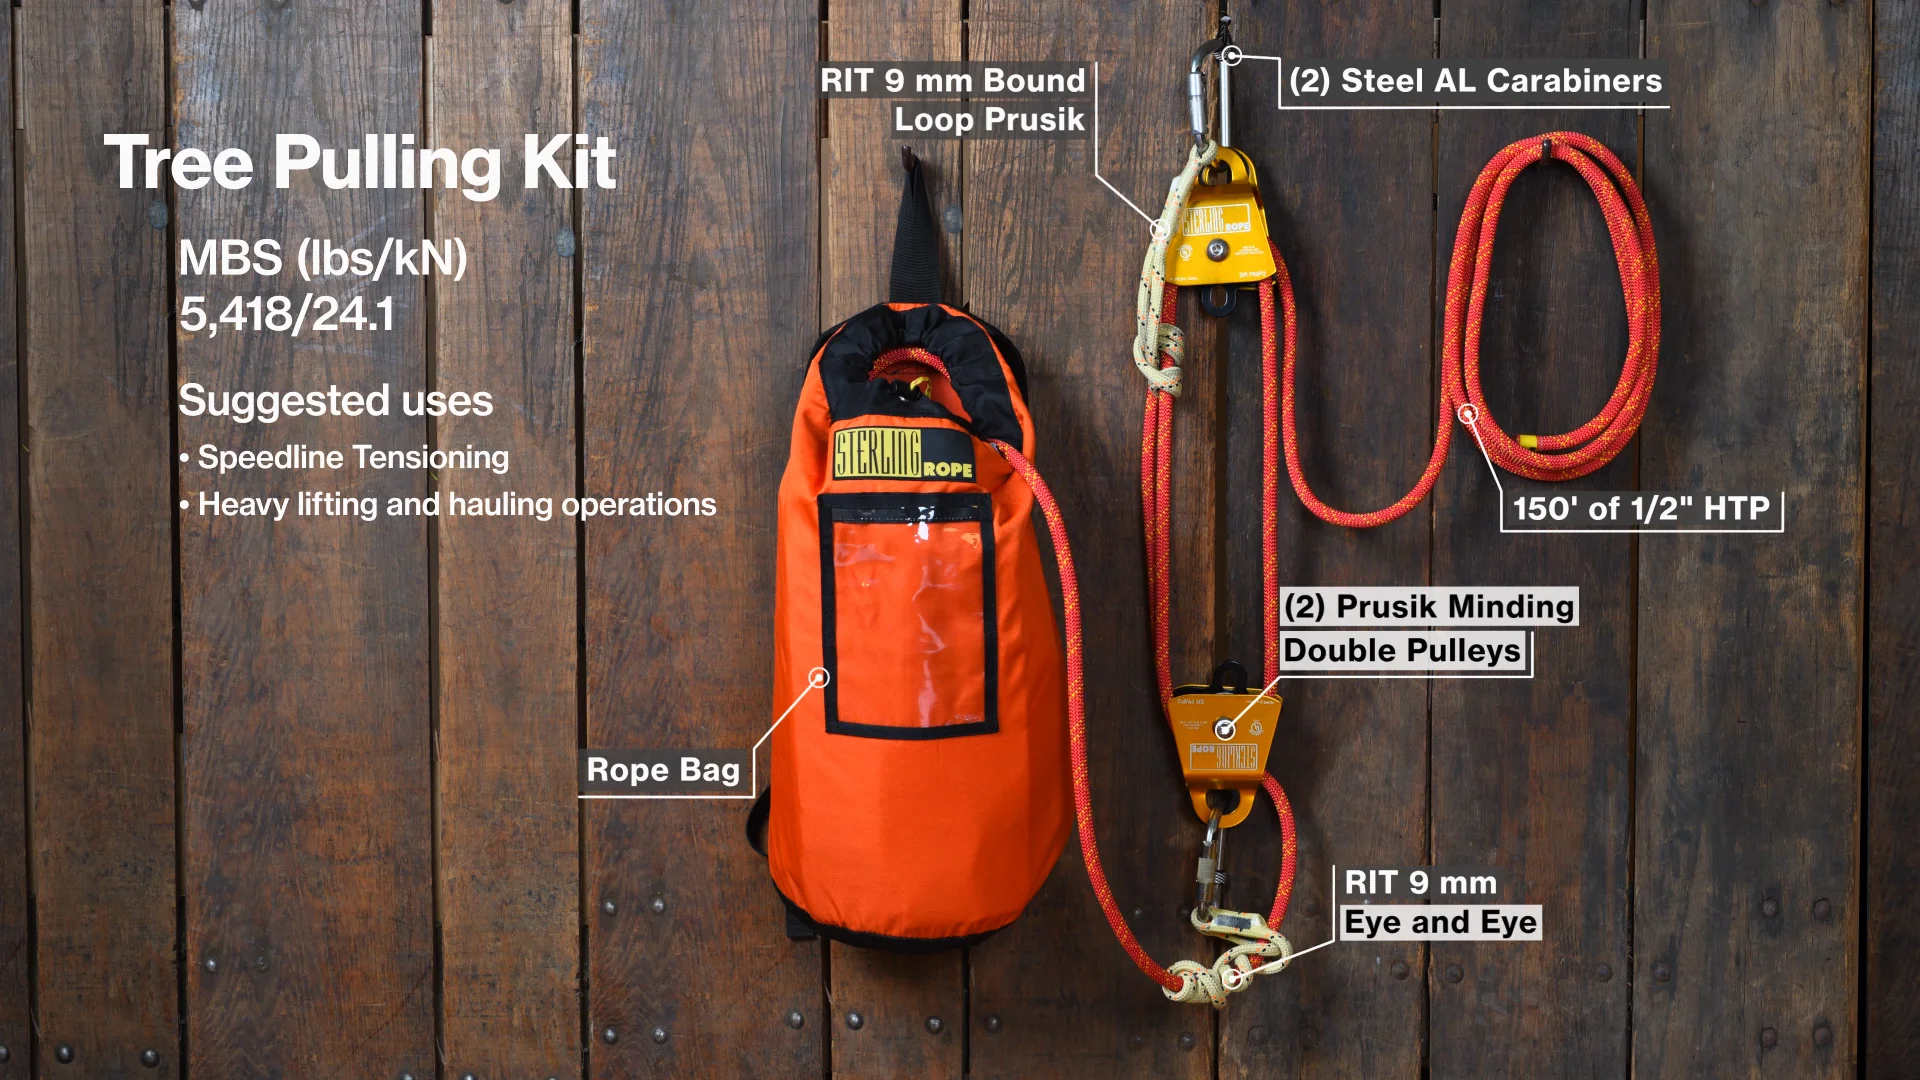 Sterling Rope Product Series - Tree Pulling Kit on Vimeo